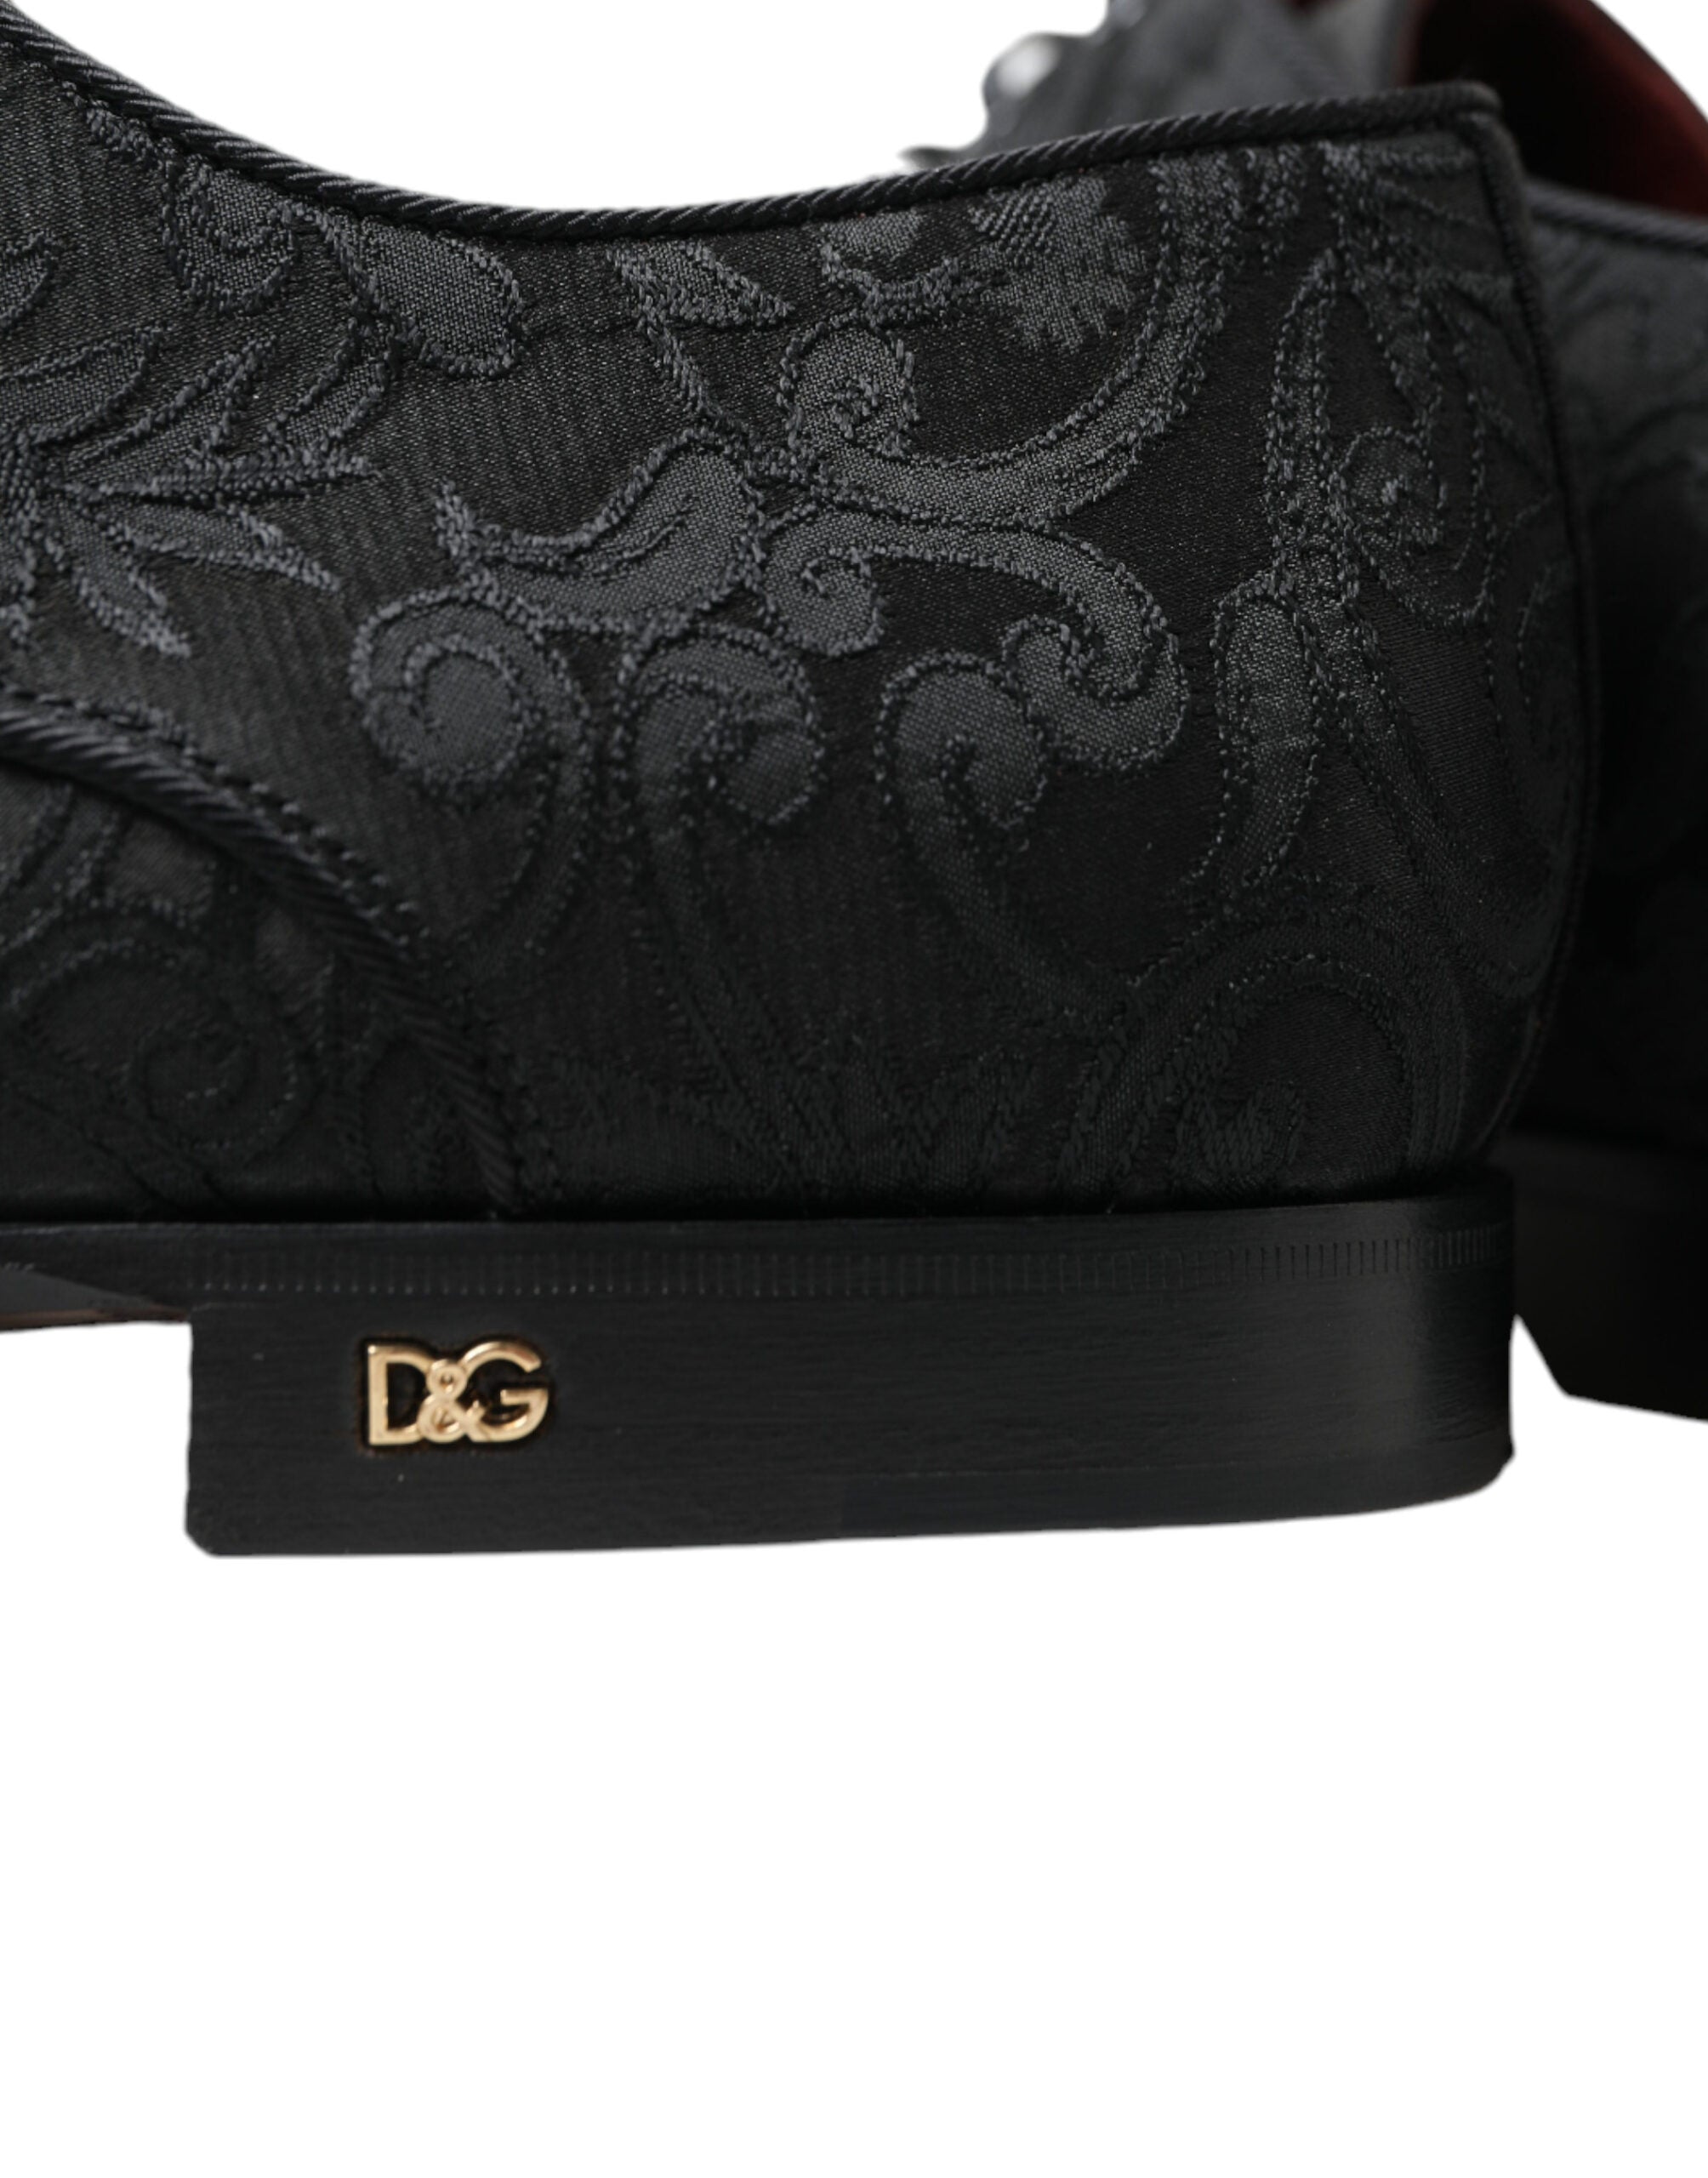 Dolce & Gabbana Elegant Jacquard Lace-Up Derby Dress Shoes